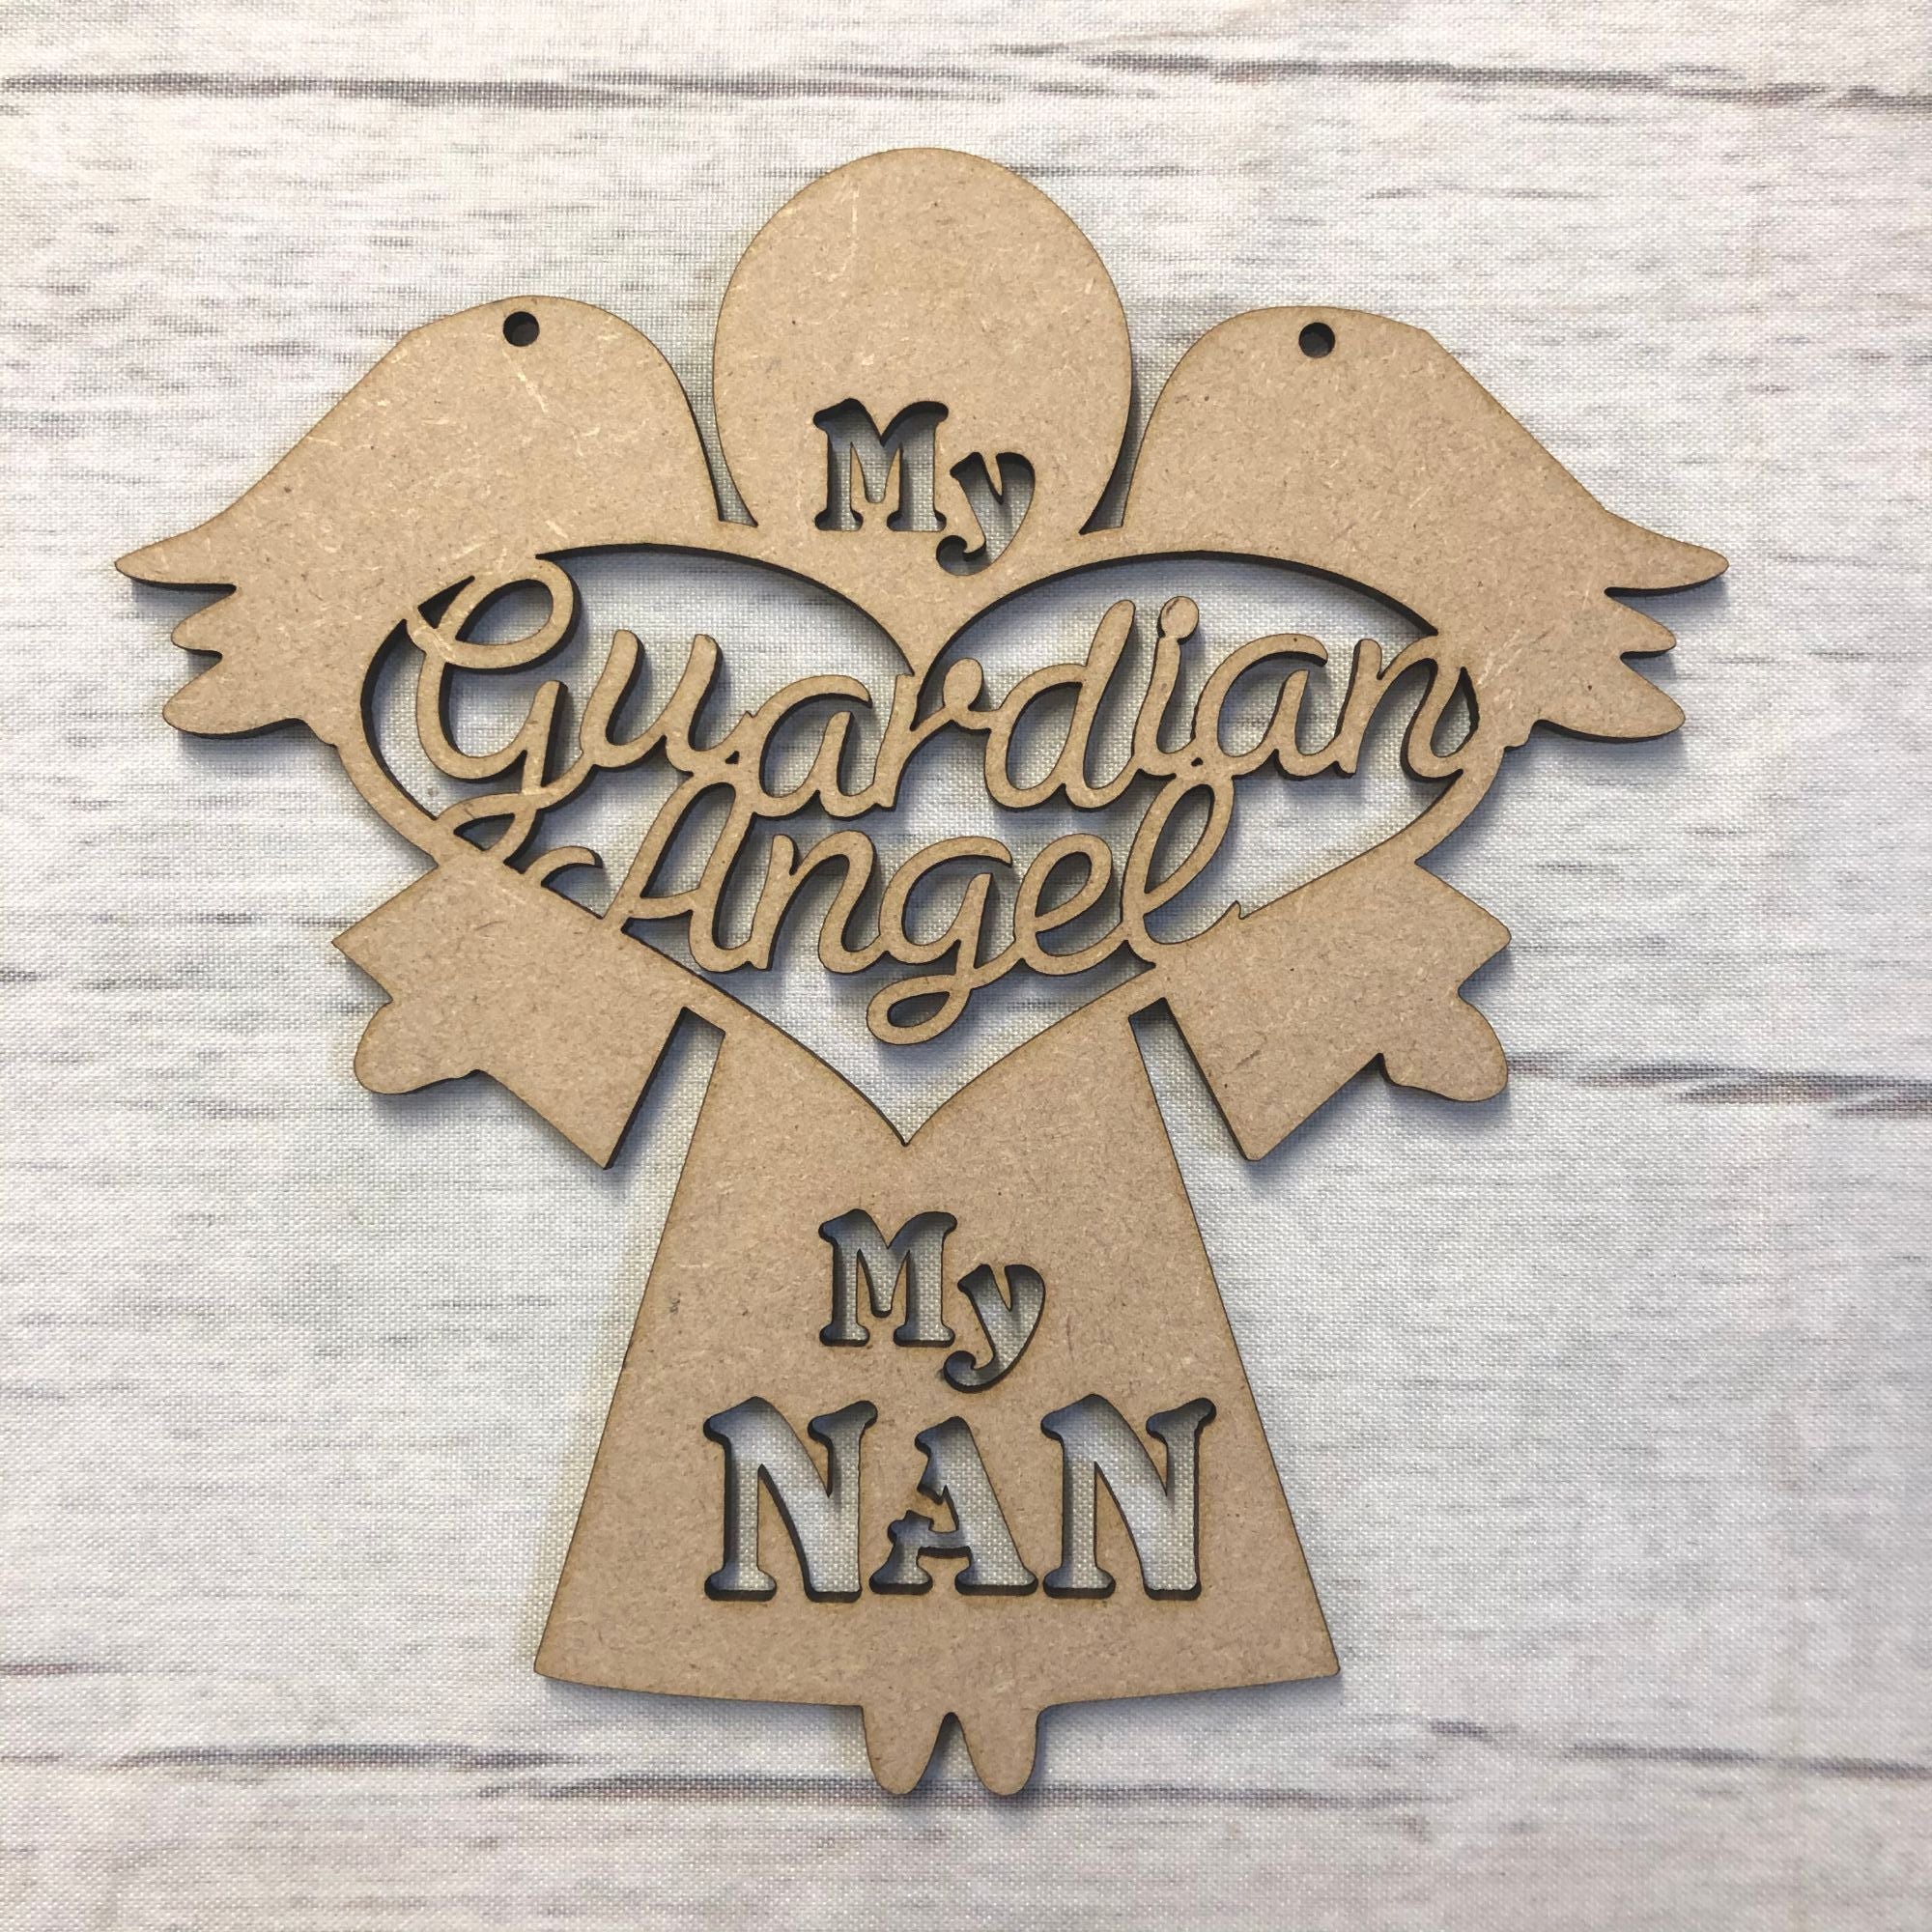 My guardian angel, my Nan' - craft hanger